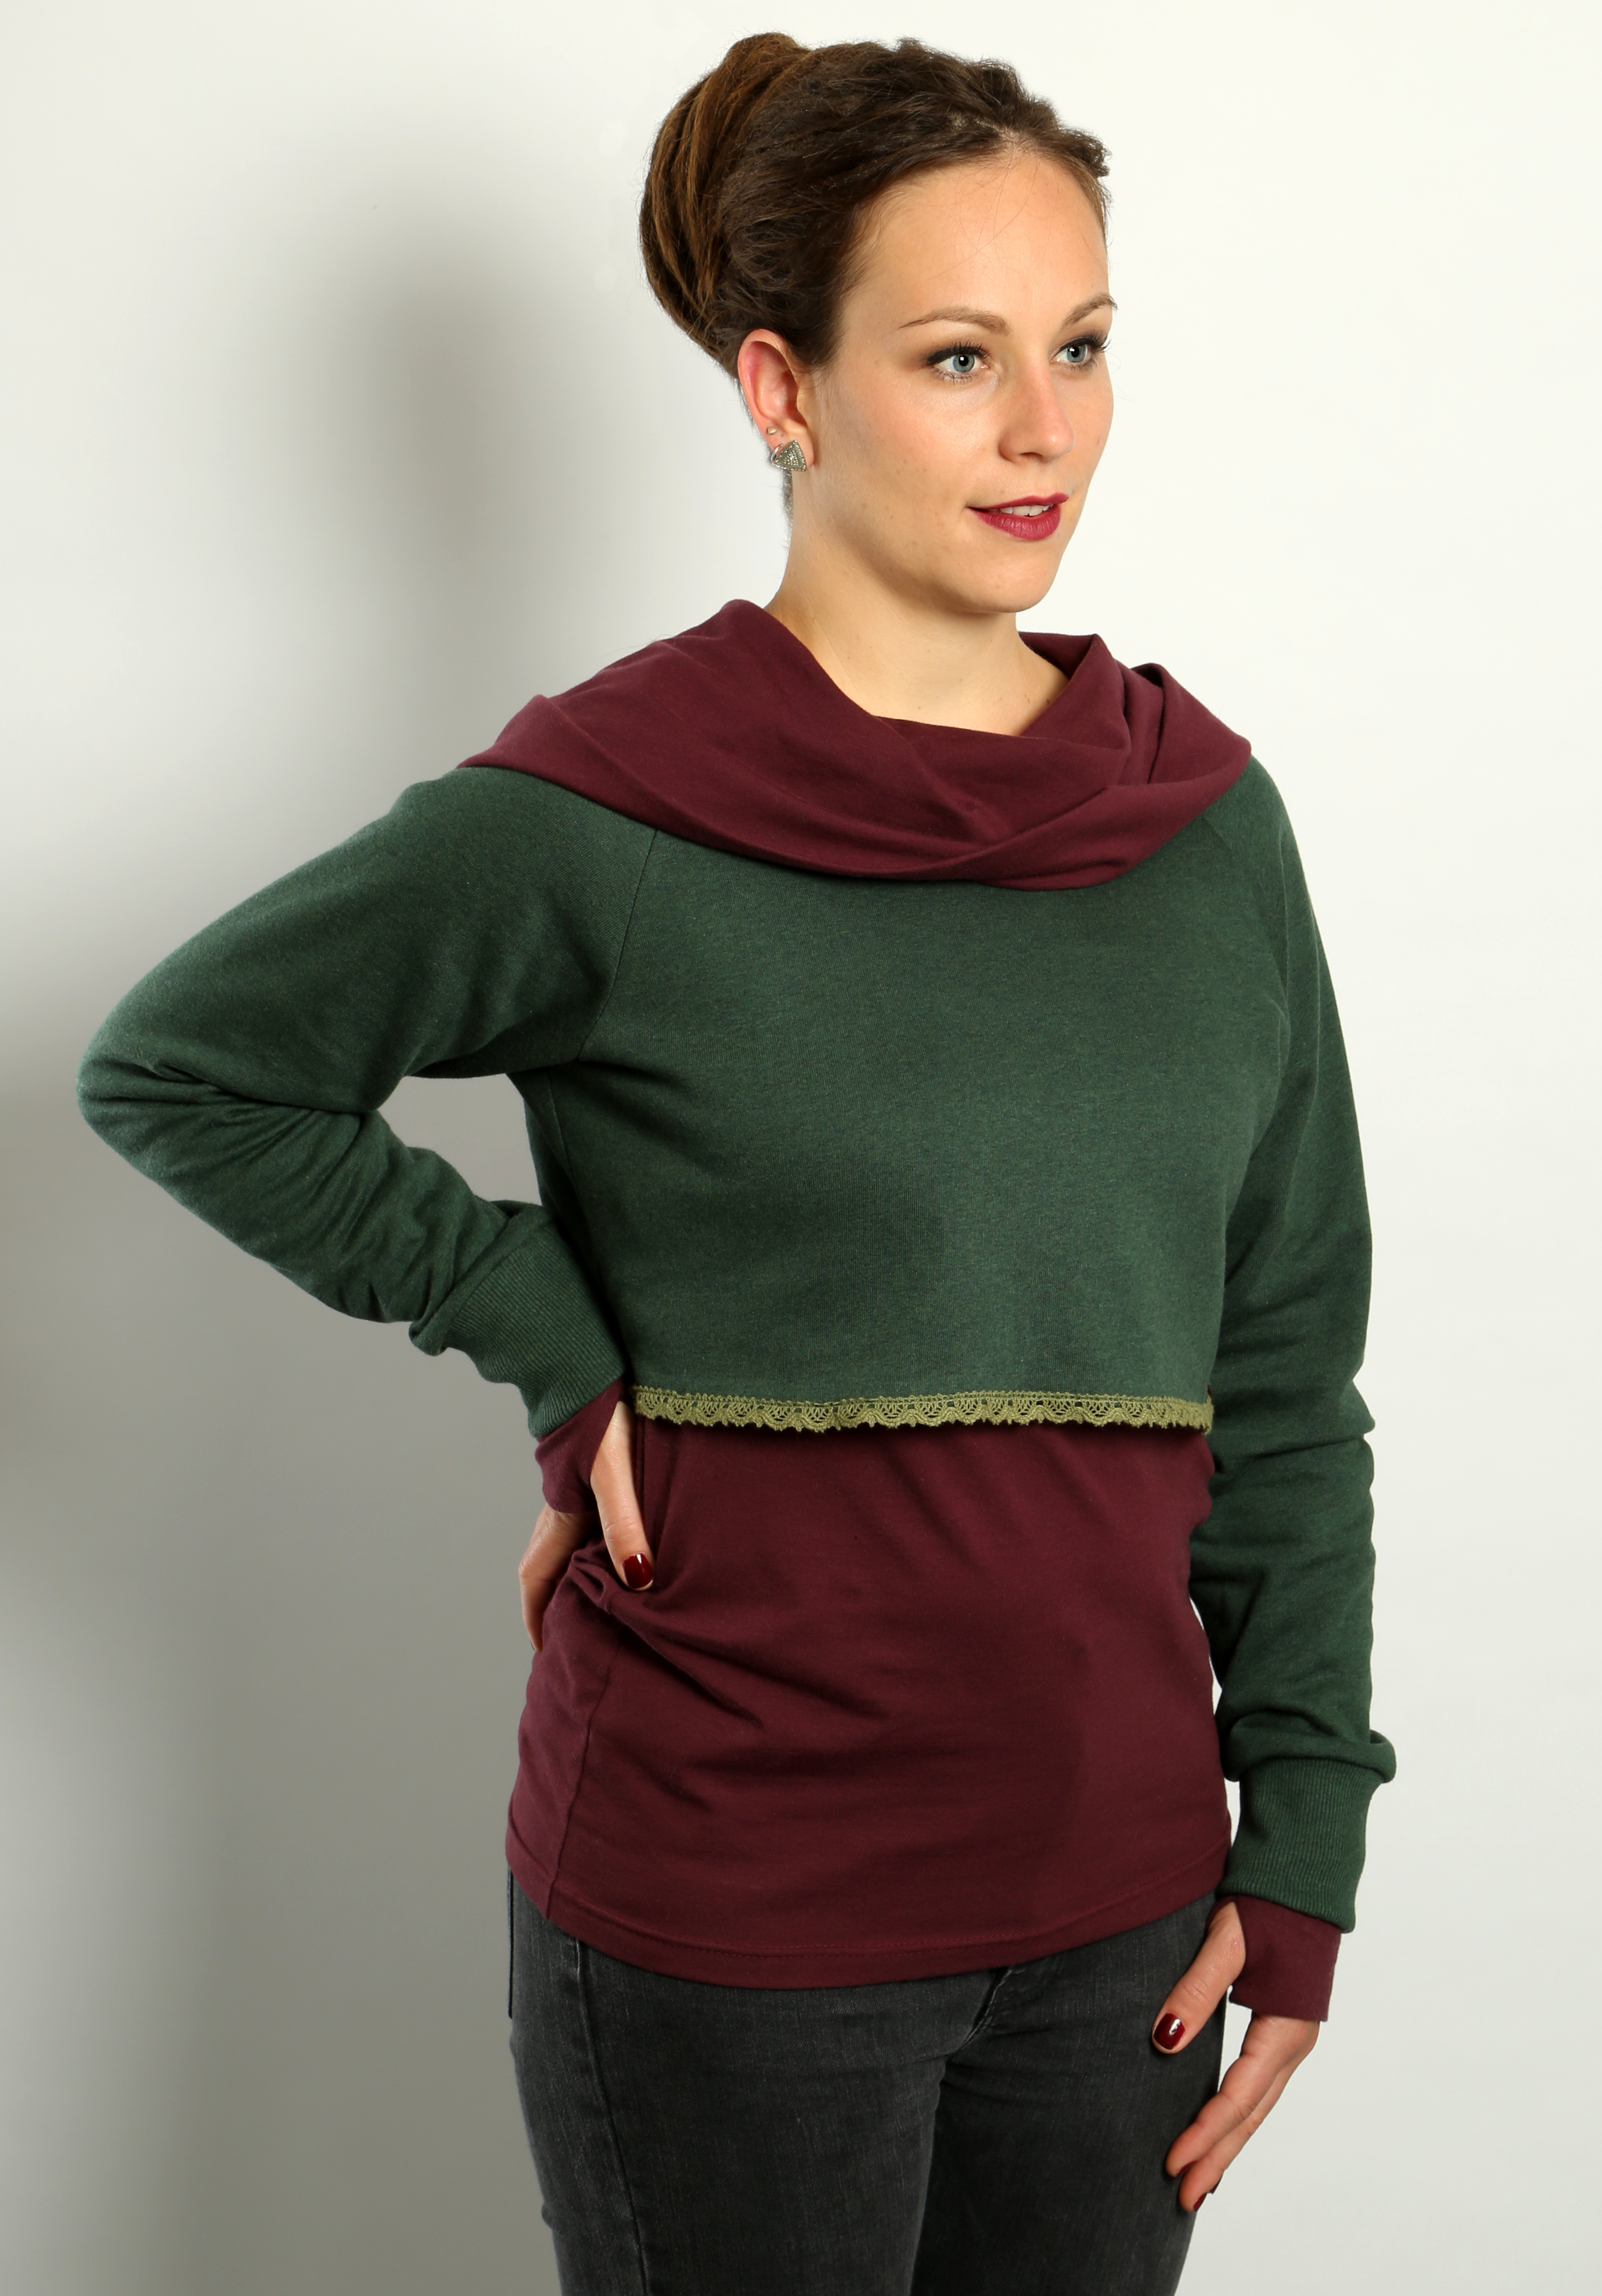 Kurzsweater Tanne